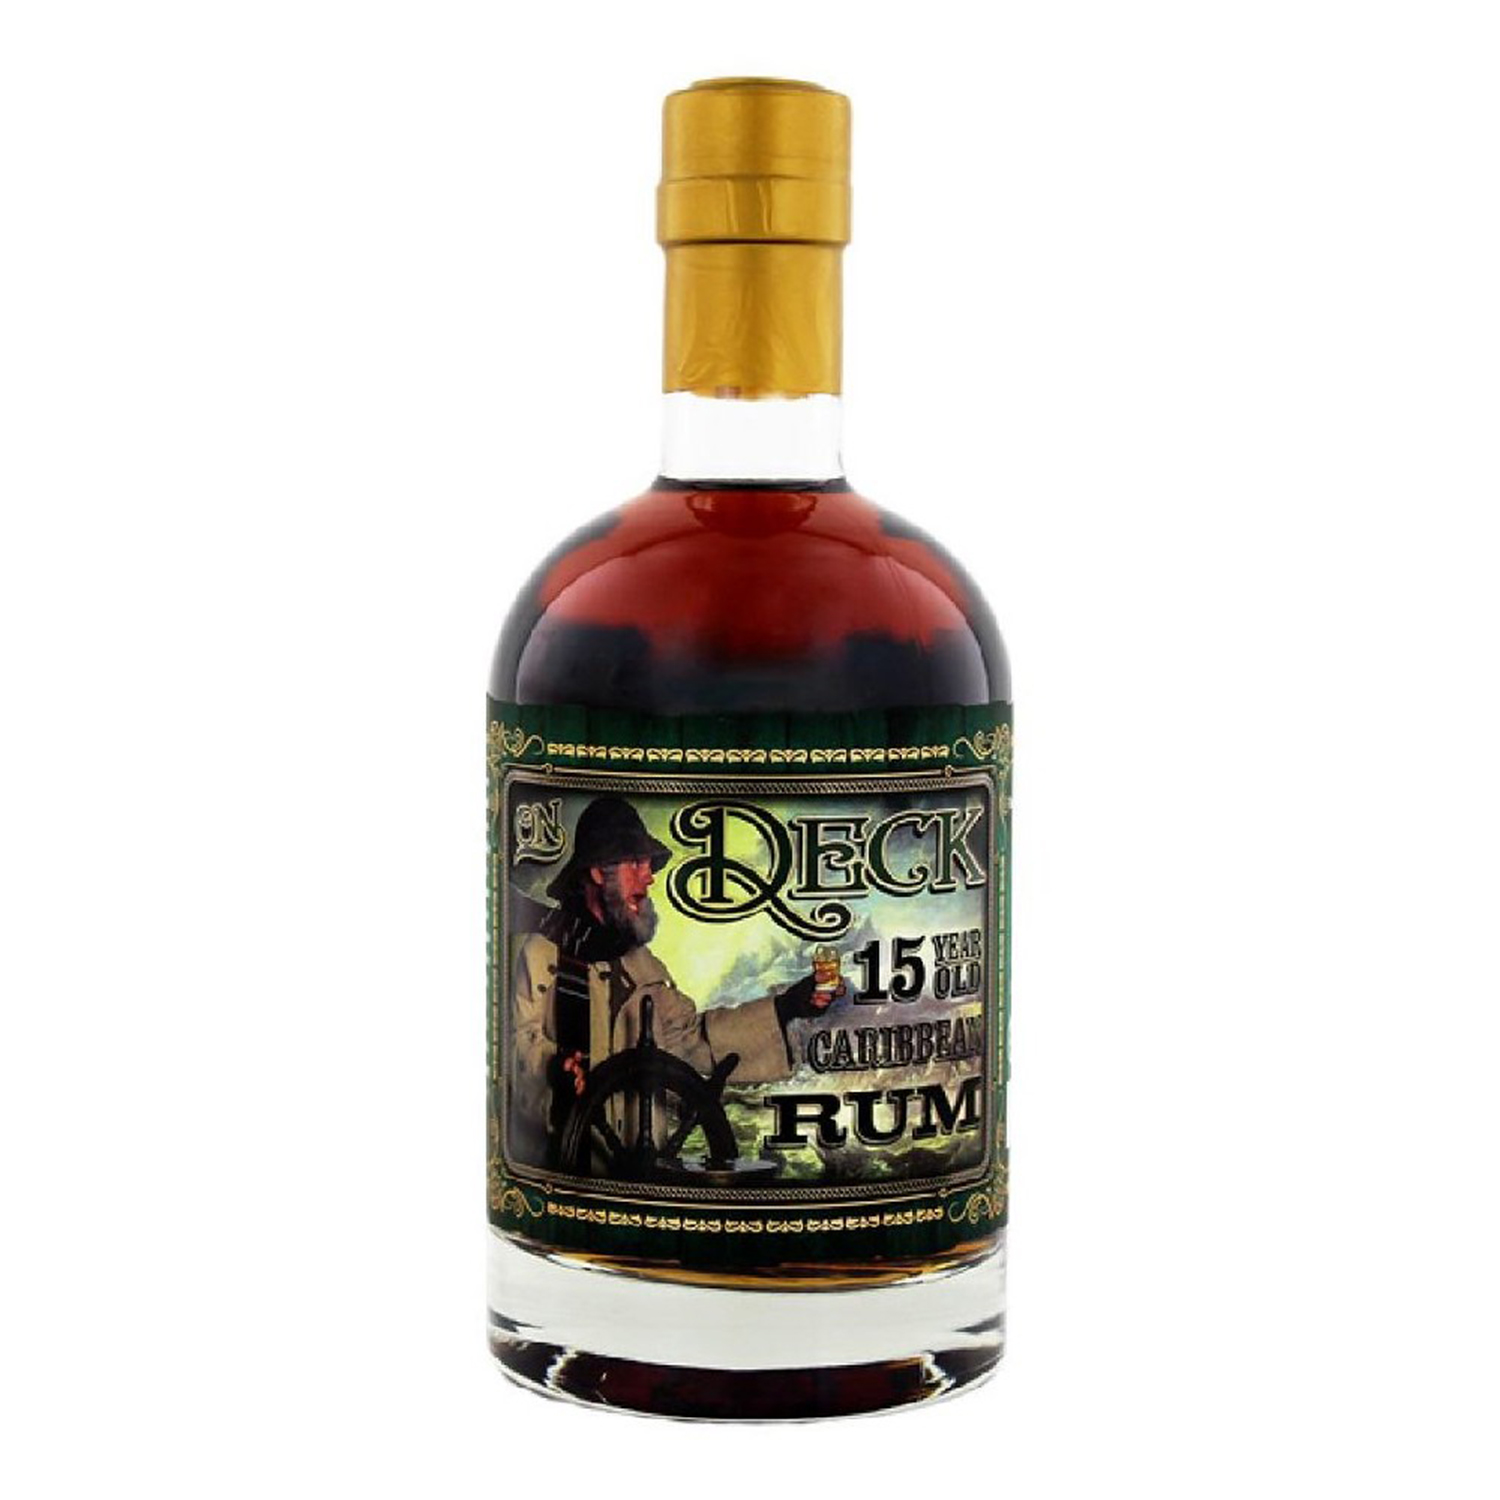 On Deck 15y Old Carribean rum 40% 0,7L